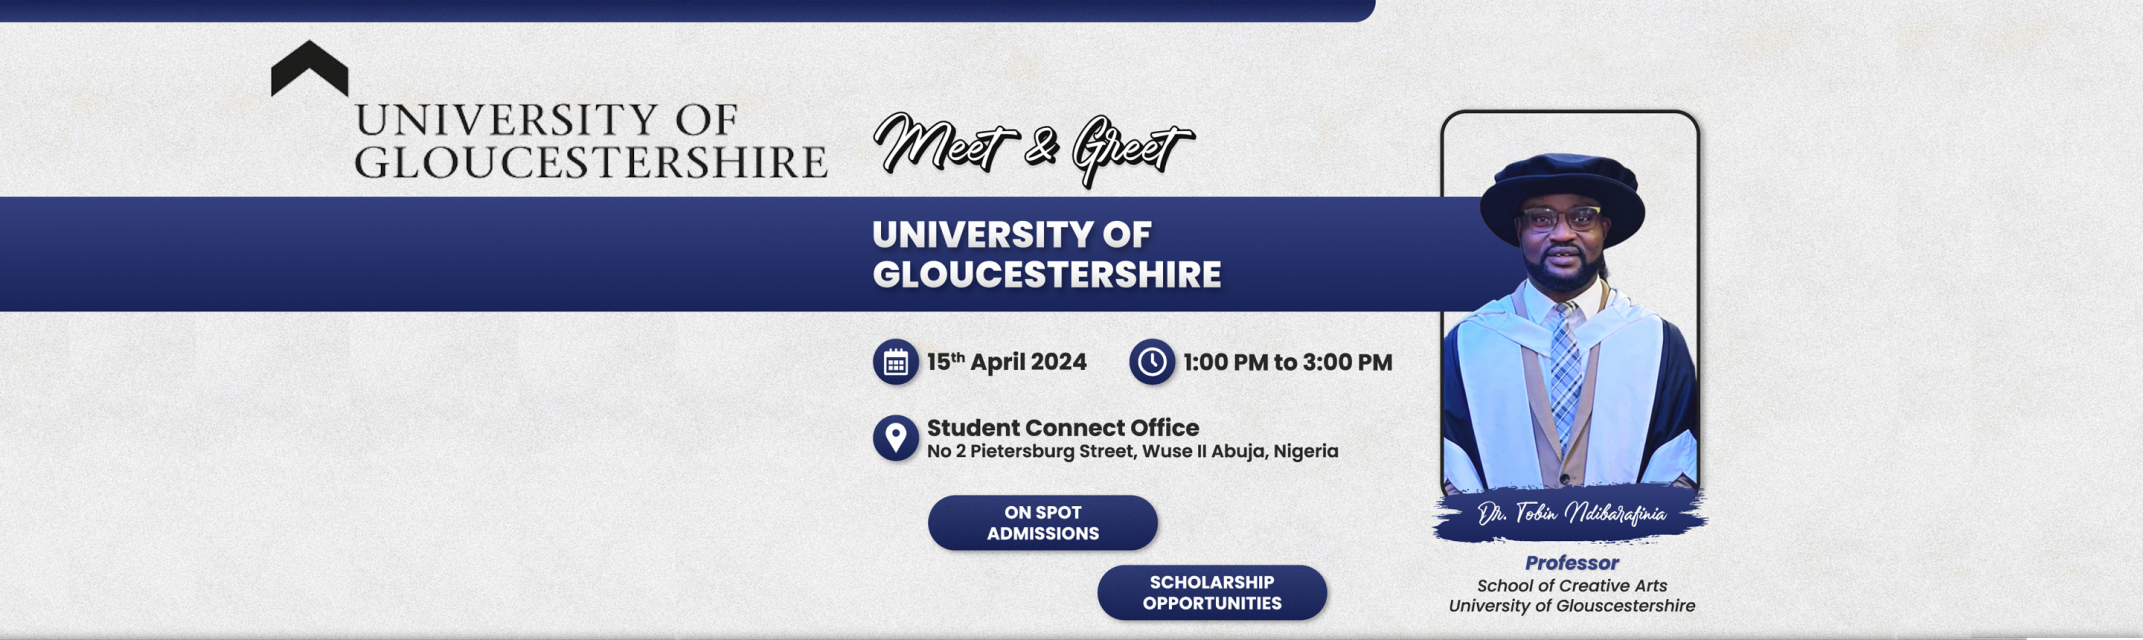 University of Gloucestershire - Meet & Greet